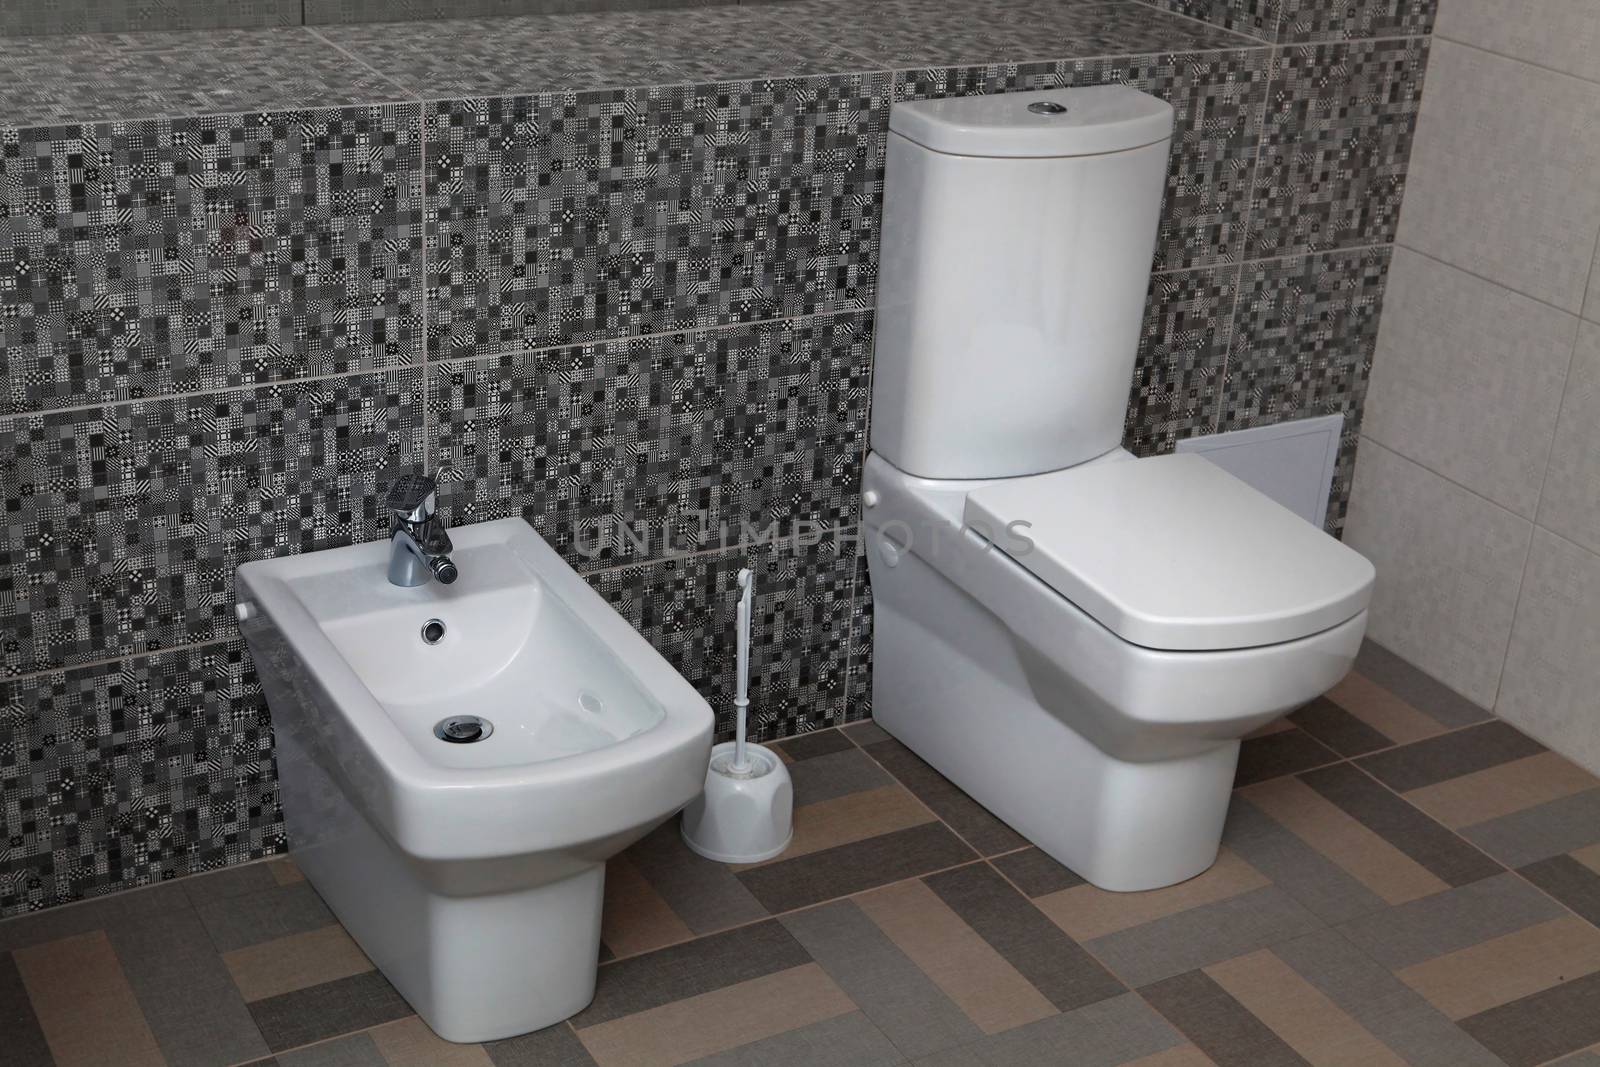 white toilet and bidet in a modern bathroom